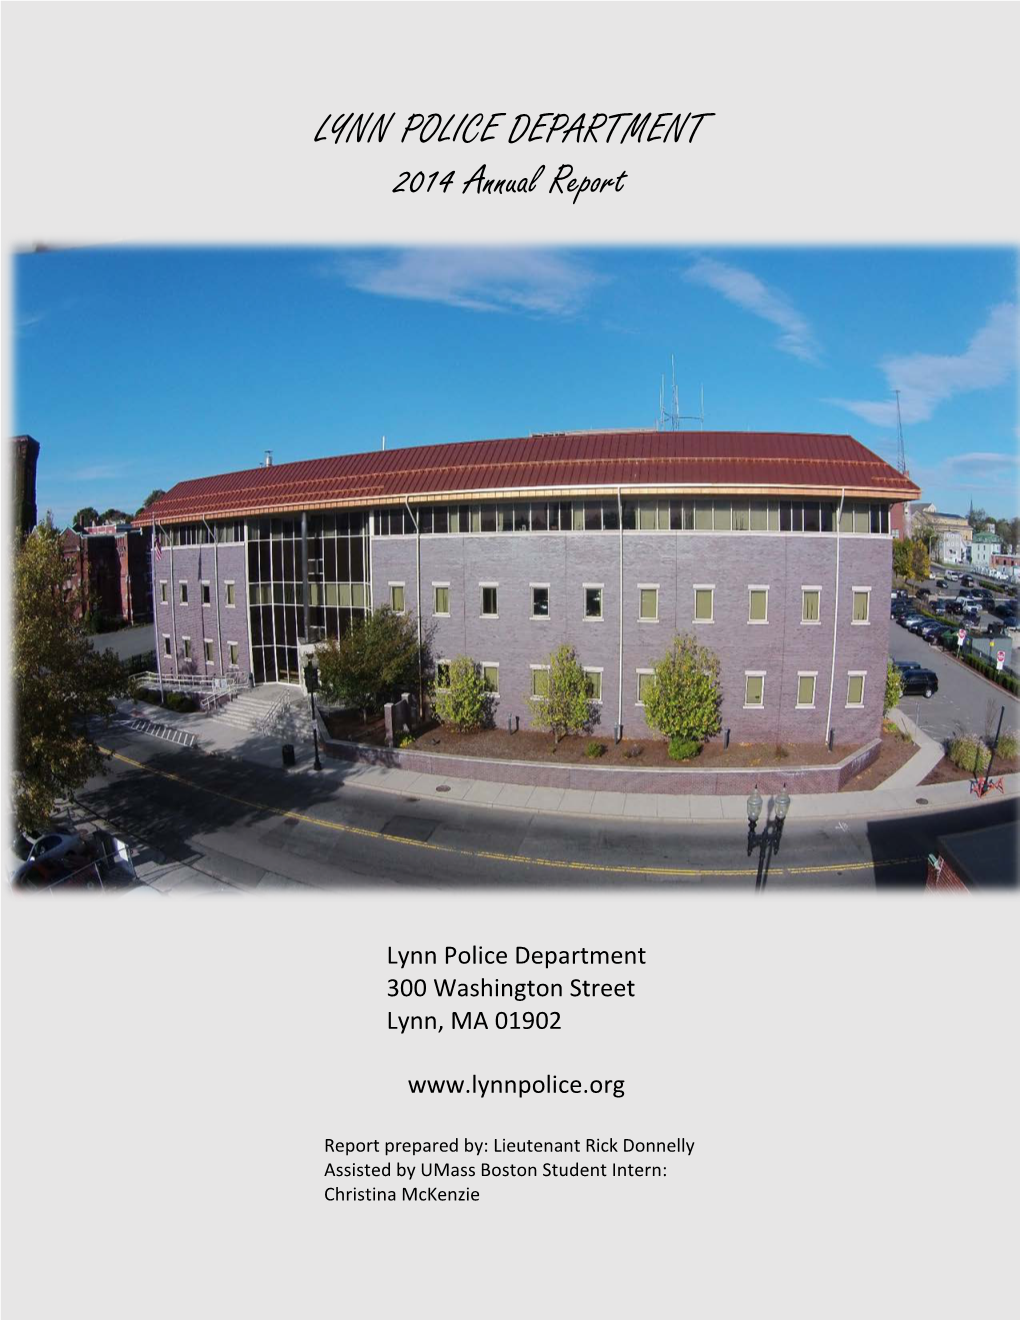 LYNN POLICE DEPARTMENT 2014 Annual Report